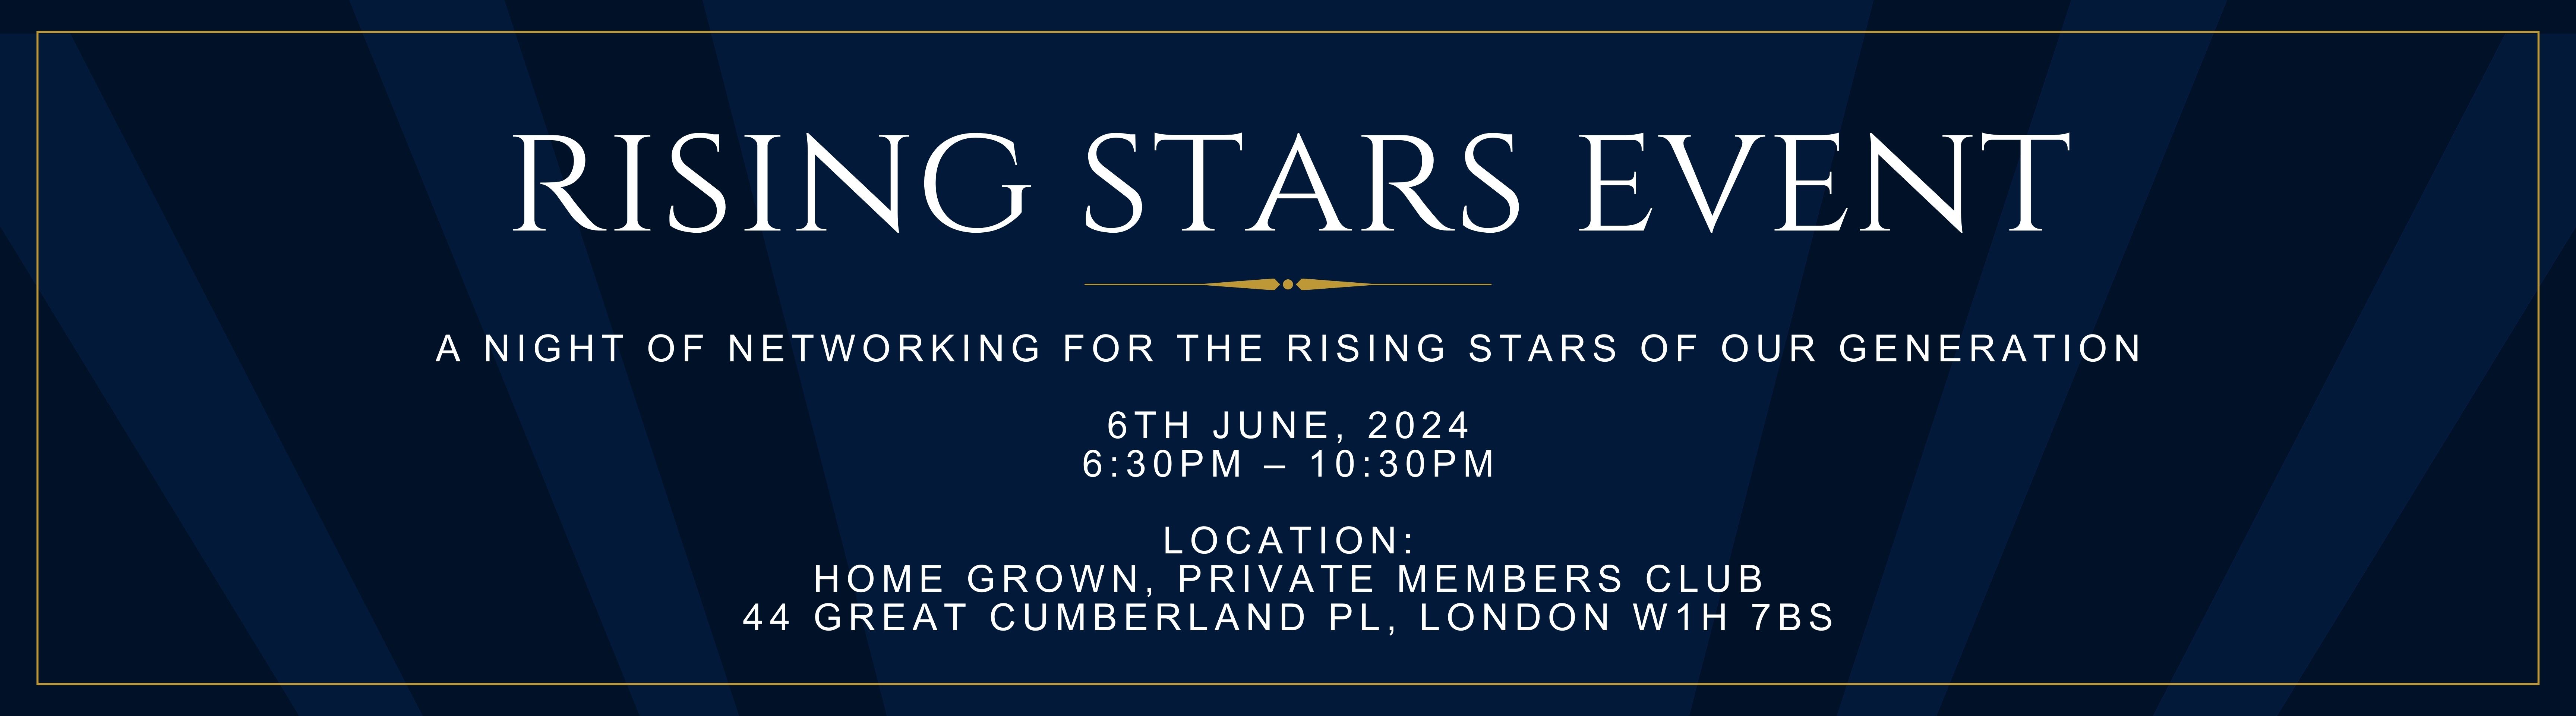 Rising stars event